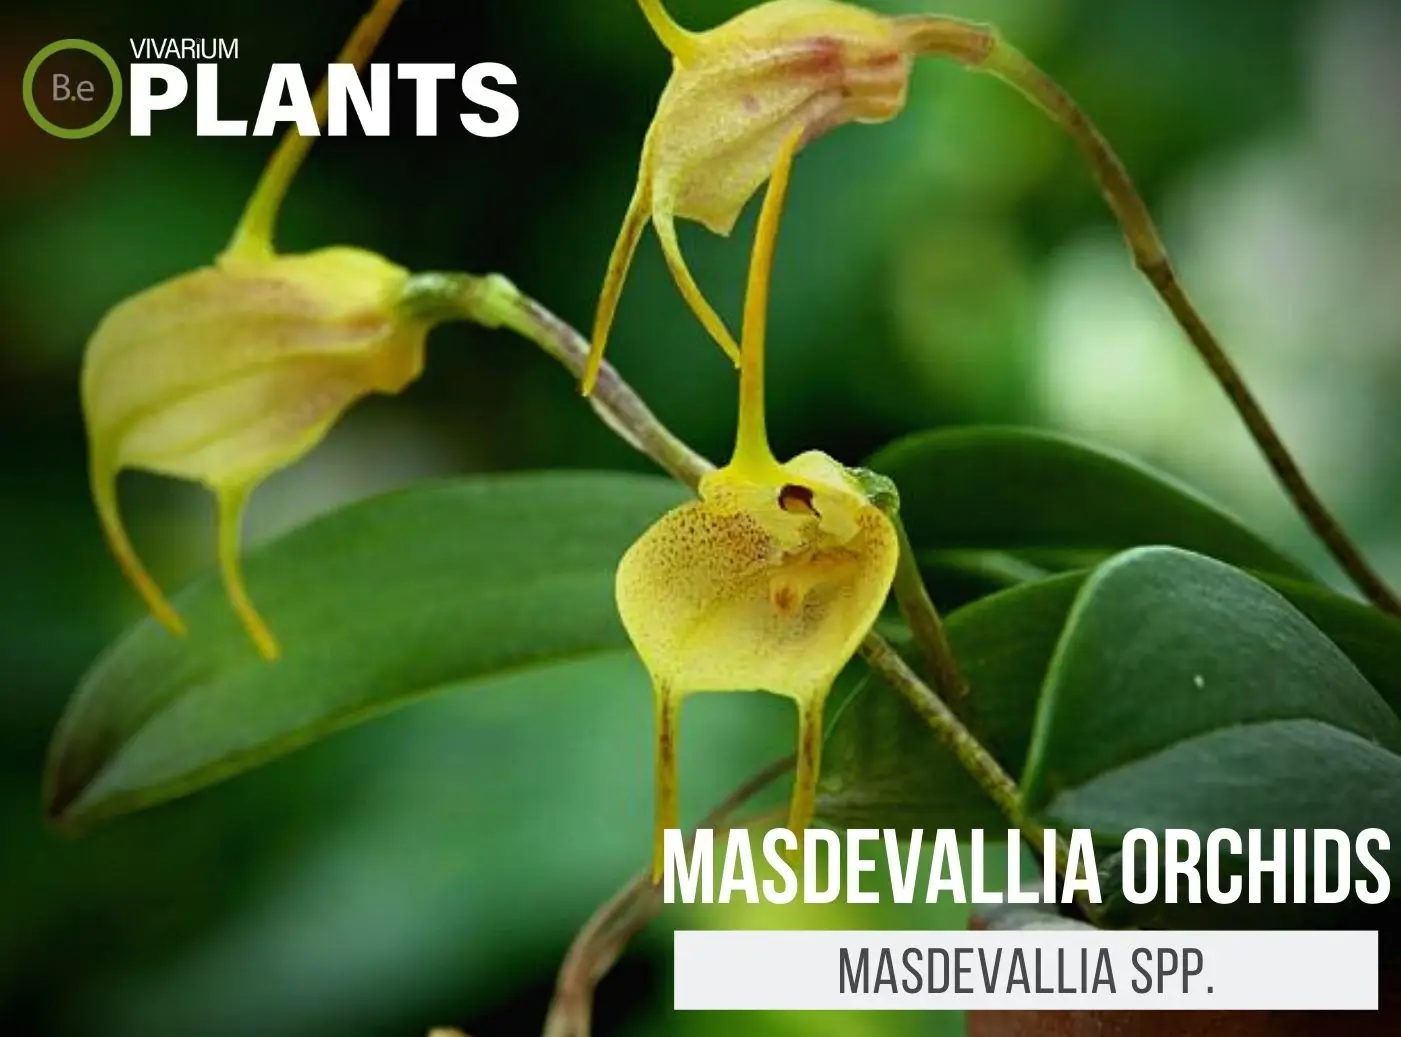 Masdevallia Spp. "Masdevallia Orchids" Plant Care Guide